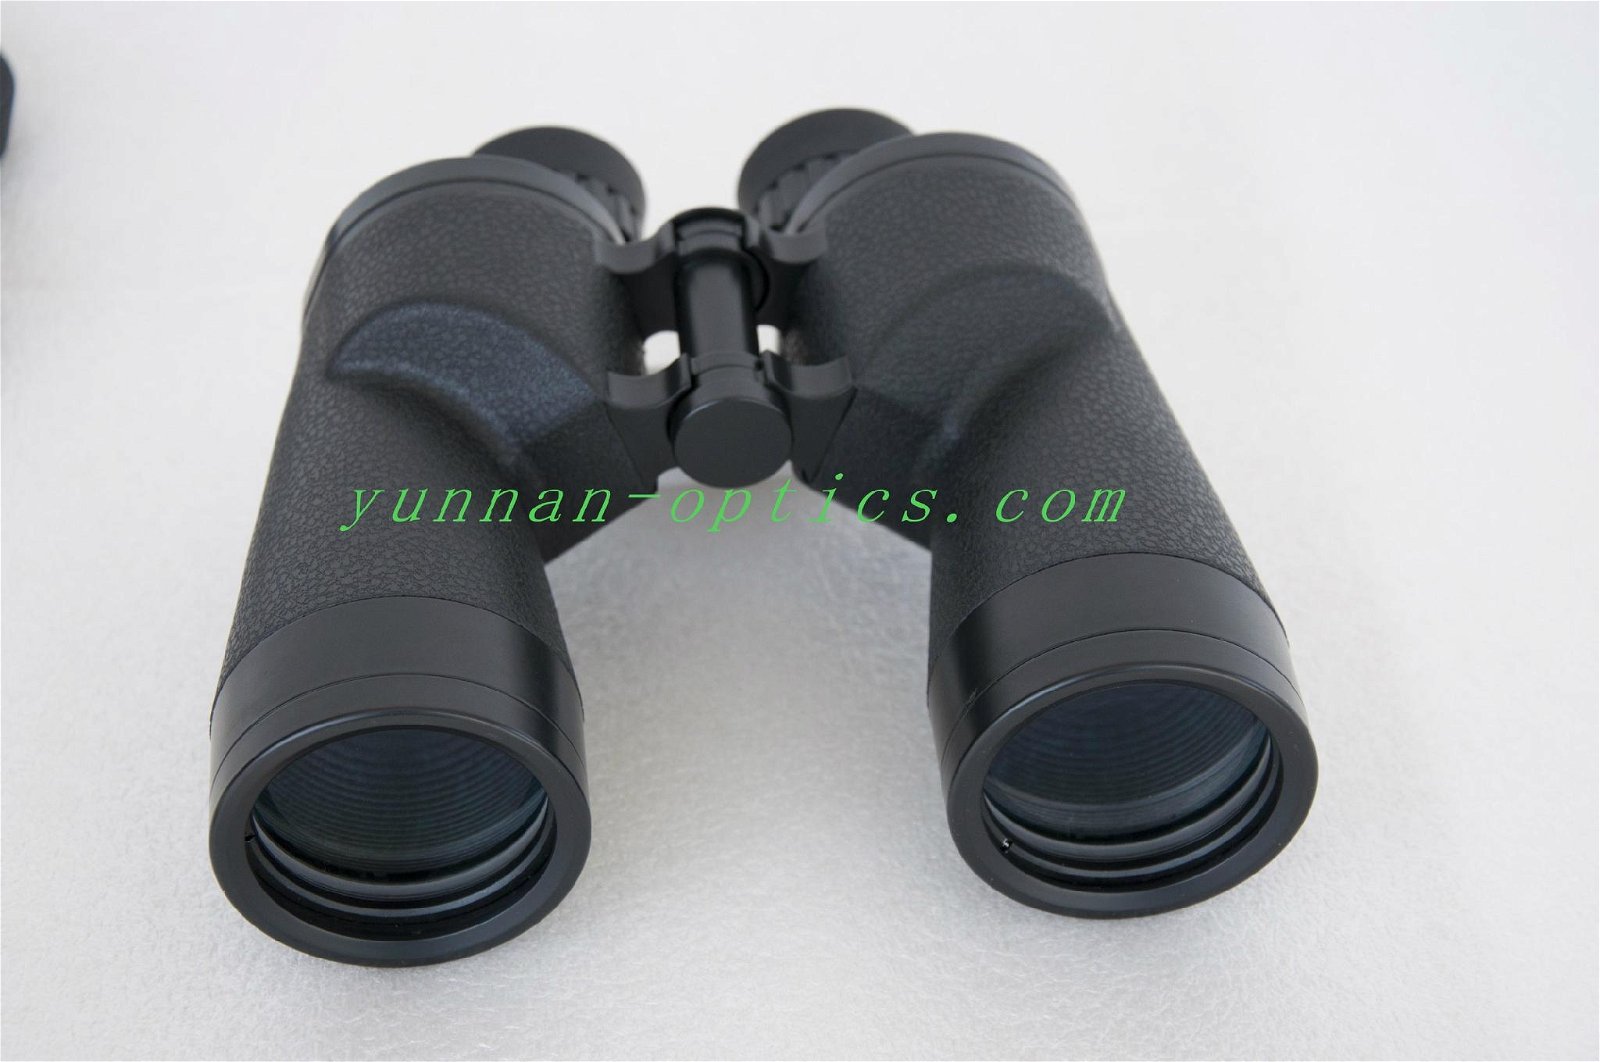  Military binocular 10x50,waterproof  4